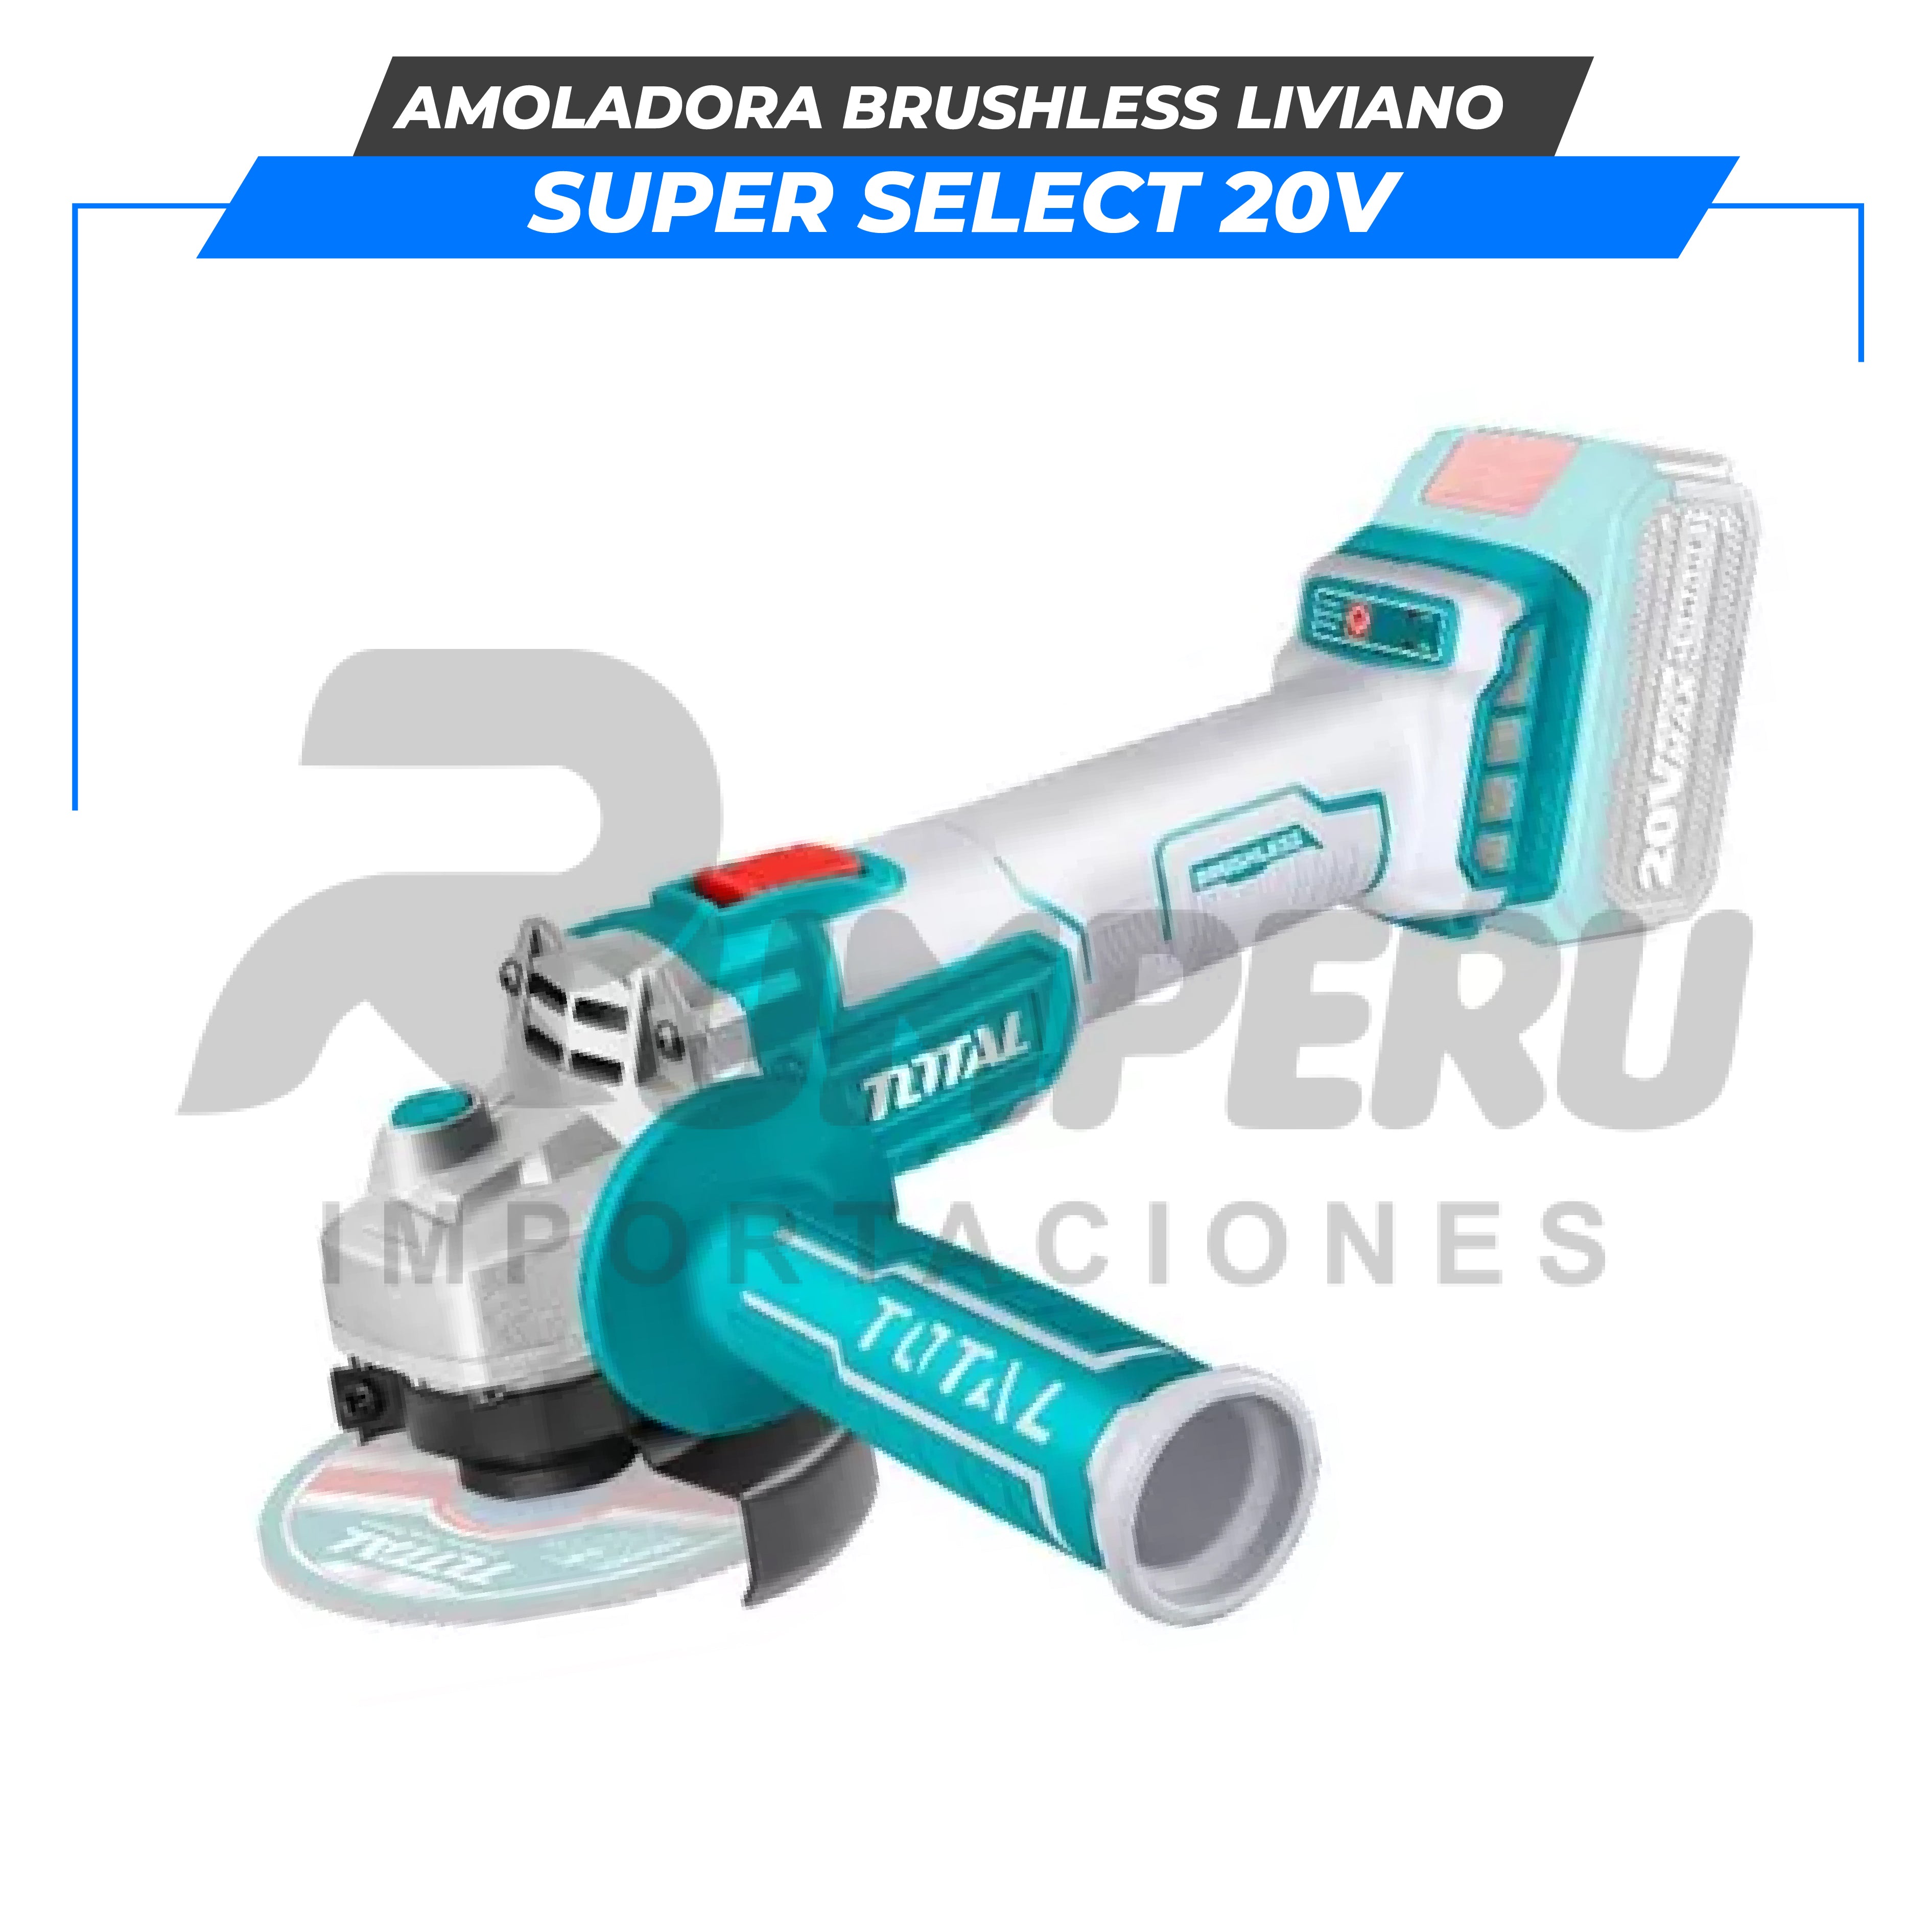 Amoladora 20v BRUSHLESS LIVIANO SUPER SELECT